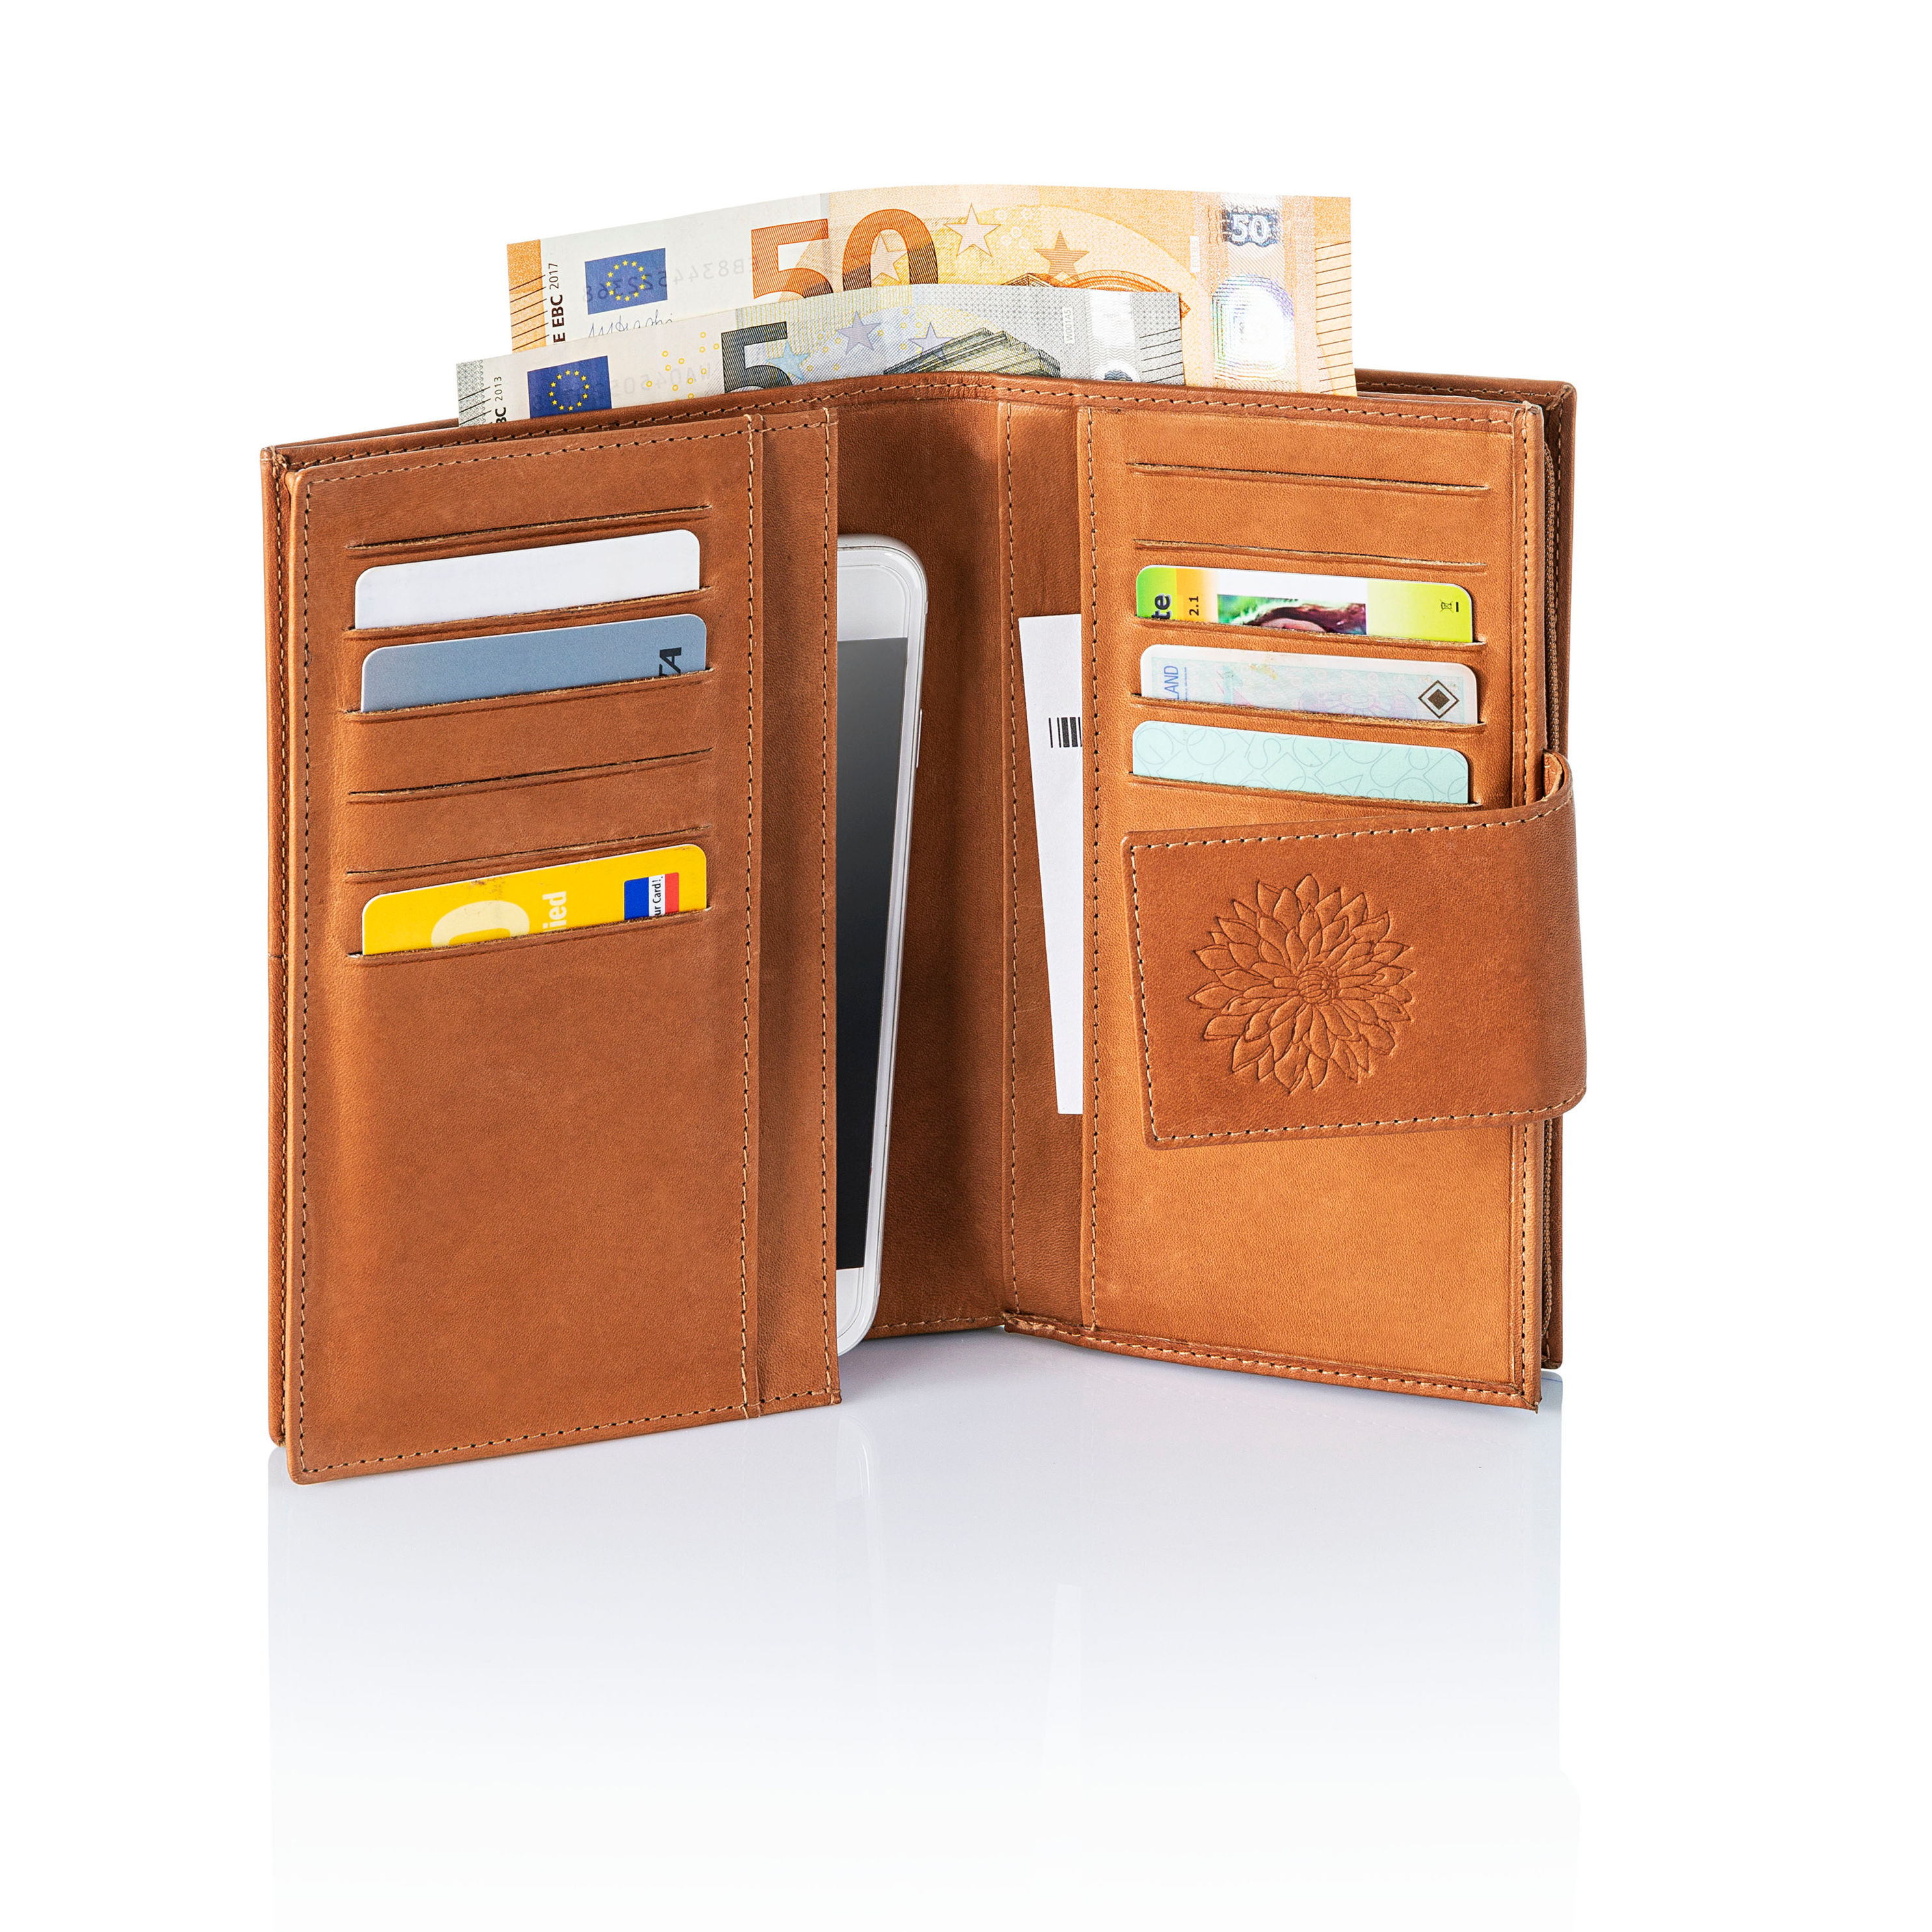 HJP RFID-Geldbörse Dahlie Leder, Farbe: cognac | Weltbild.at